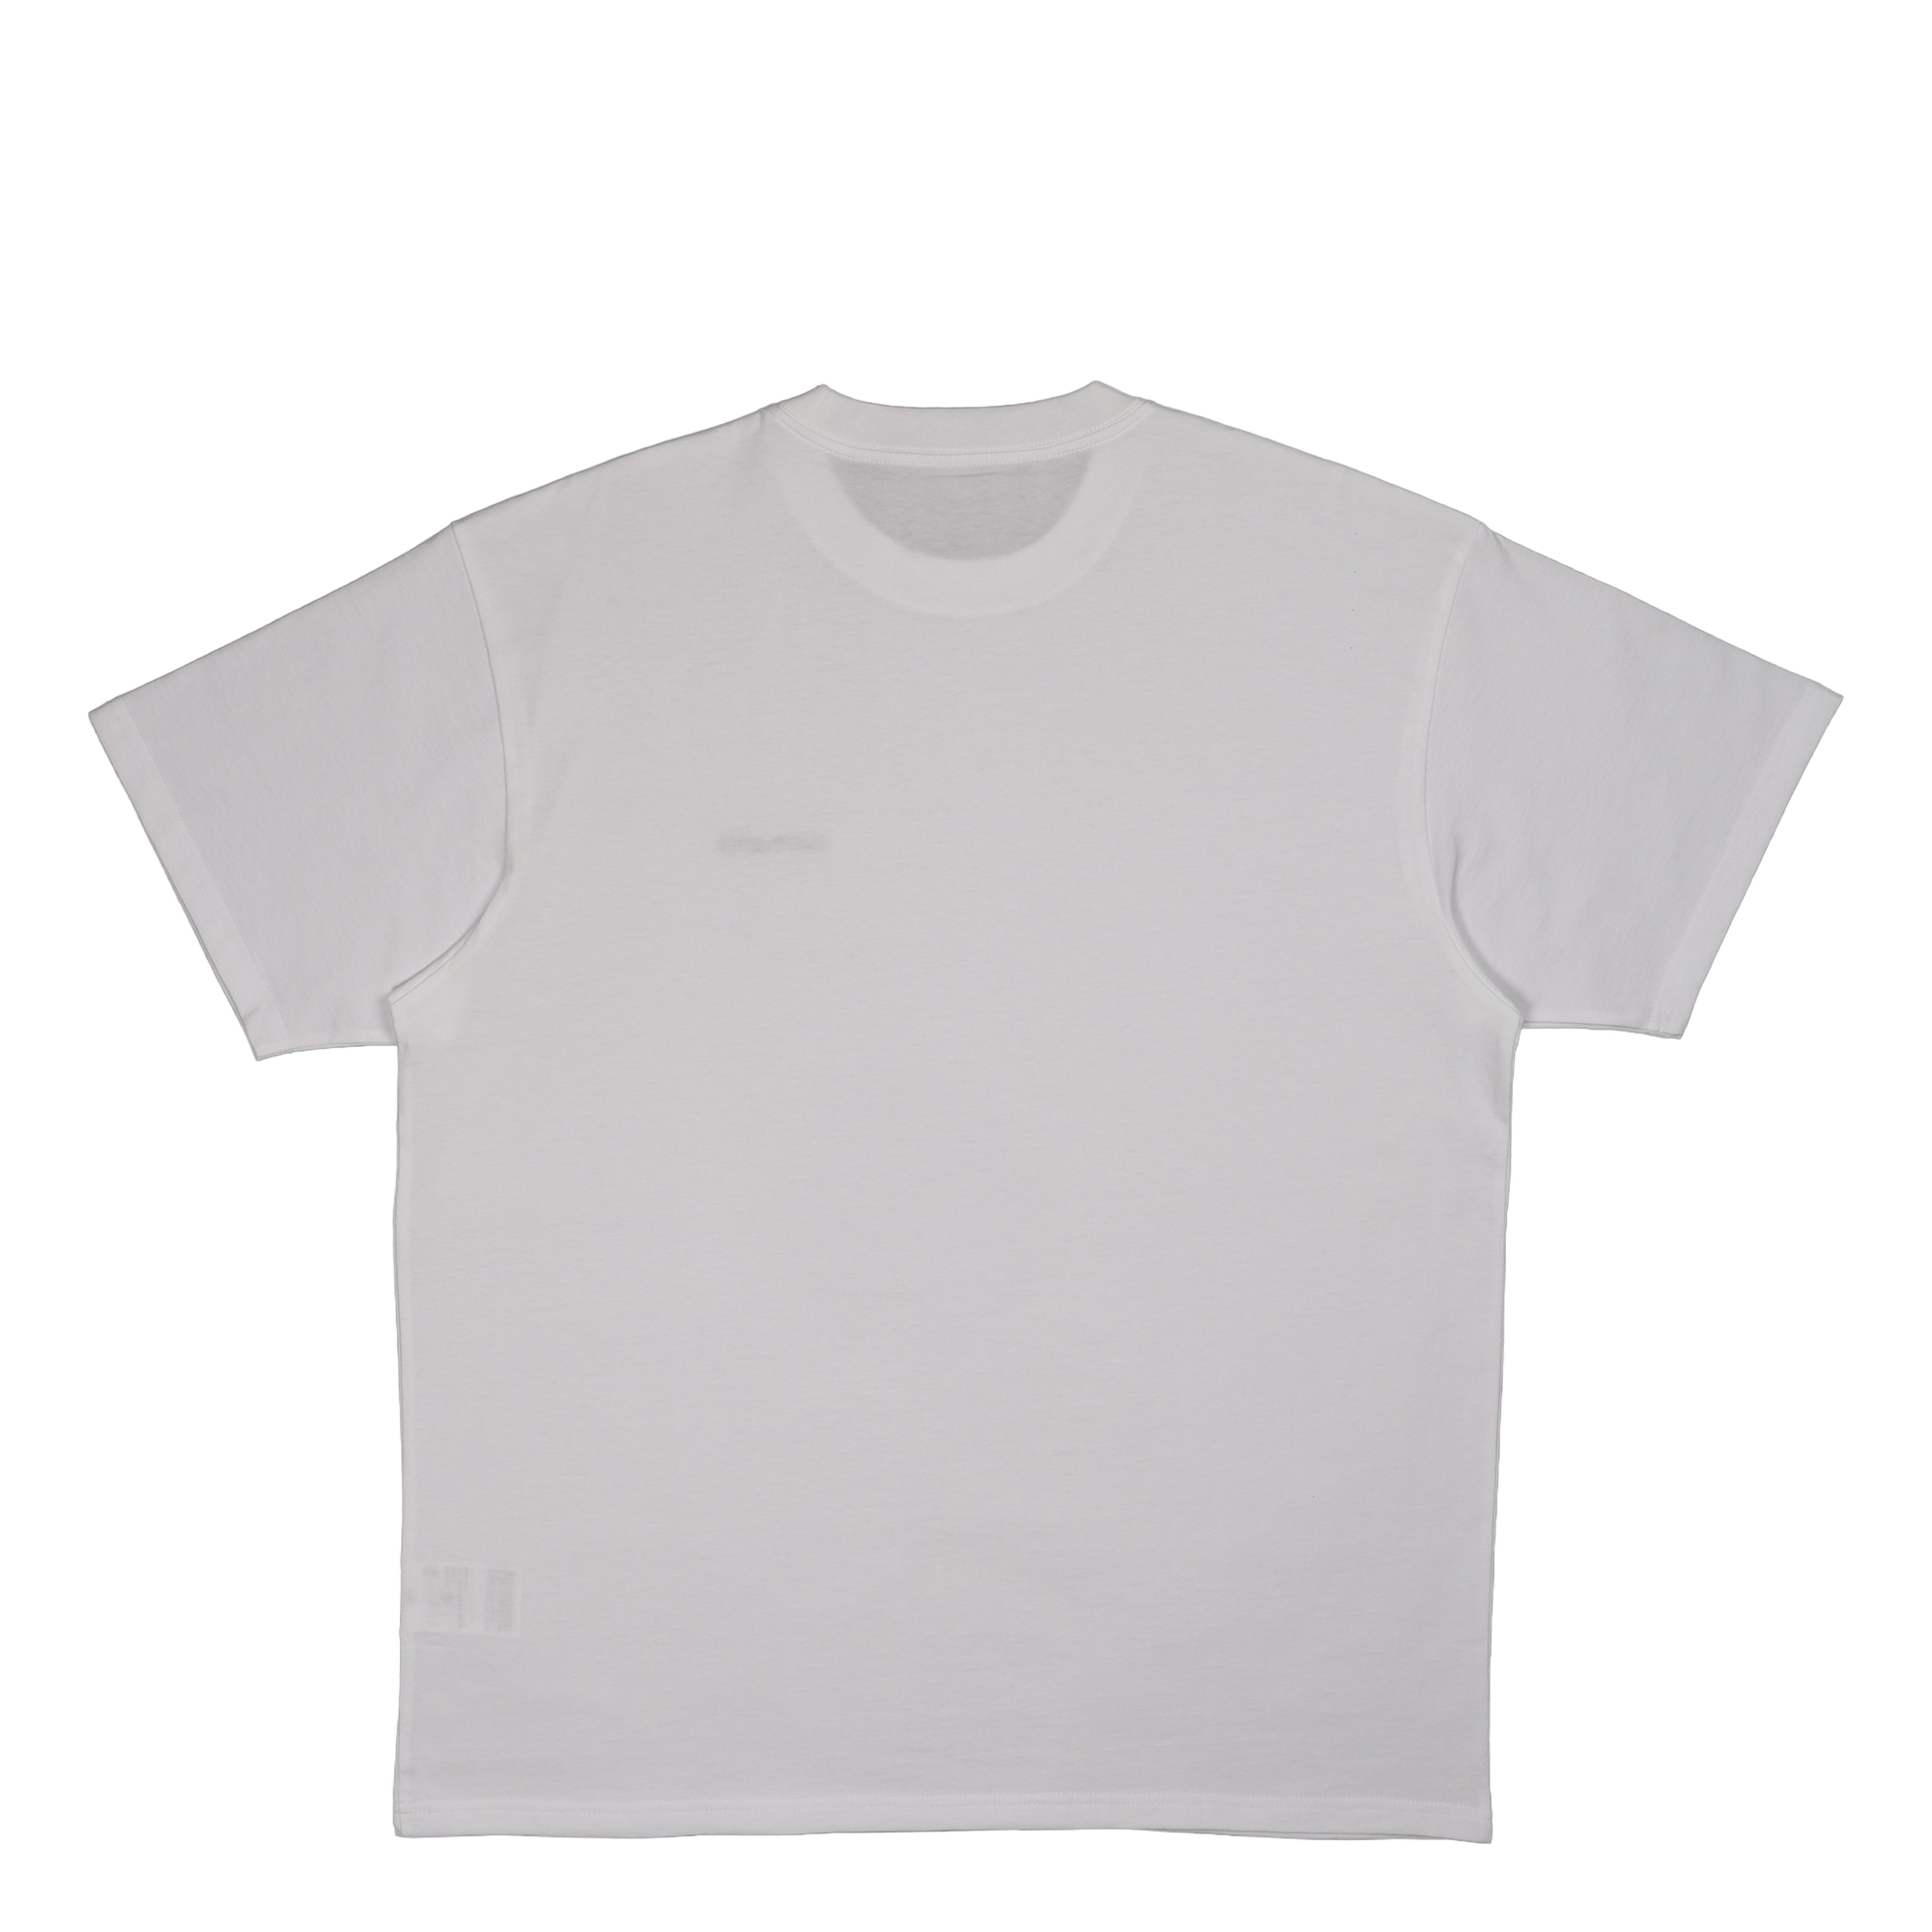 S/s Script Embroidery T-shirt White / Black